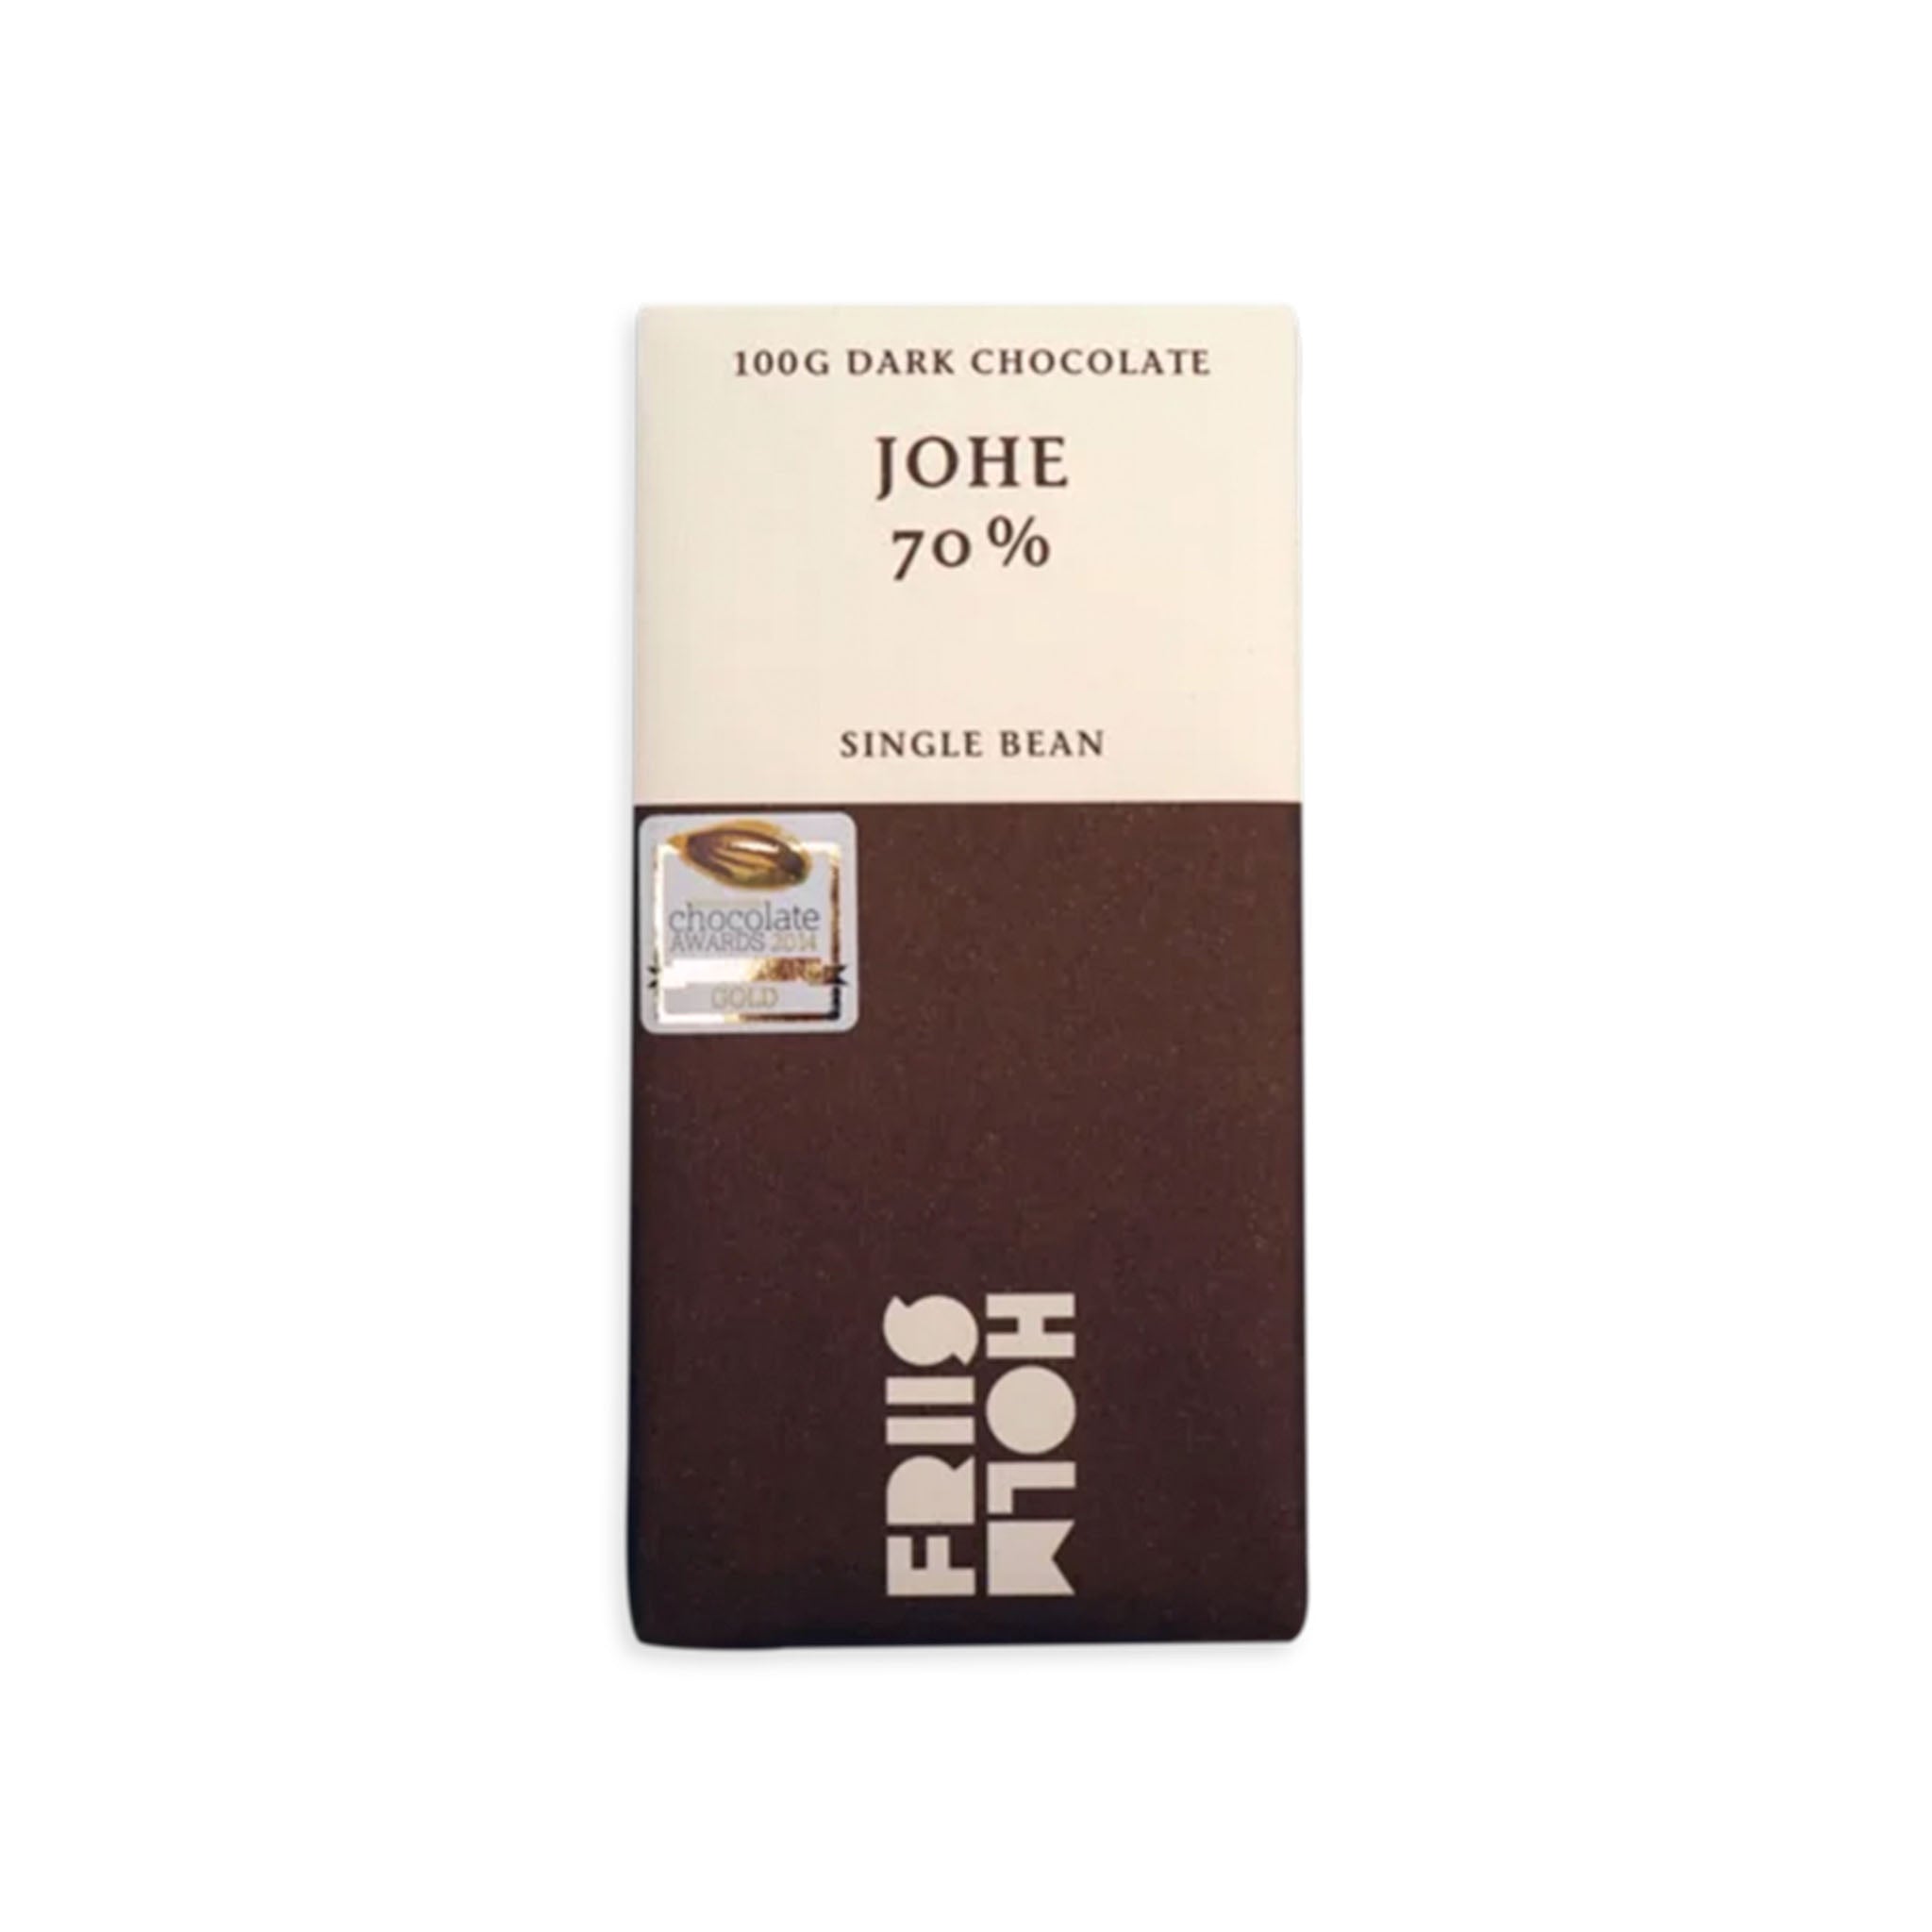 FRIIS HOLM JOHE NICARAGUA 70% DARK CHOCOLATE 100g